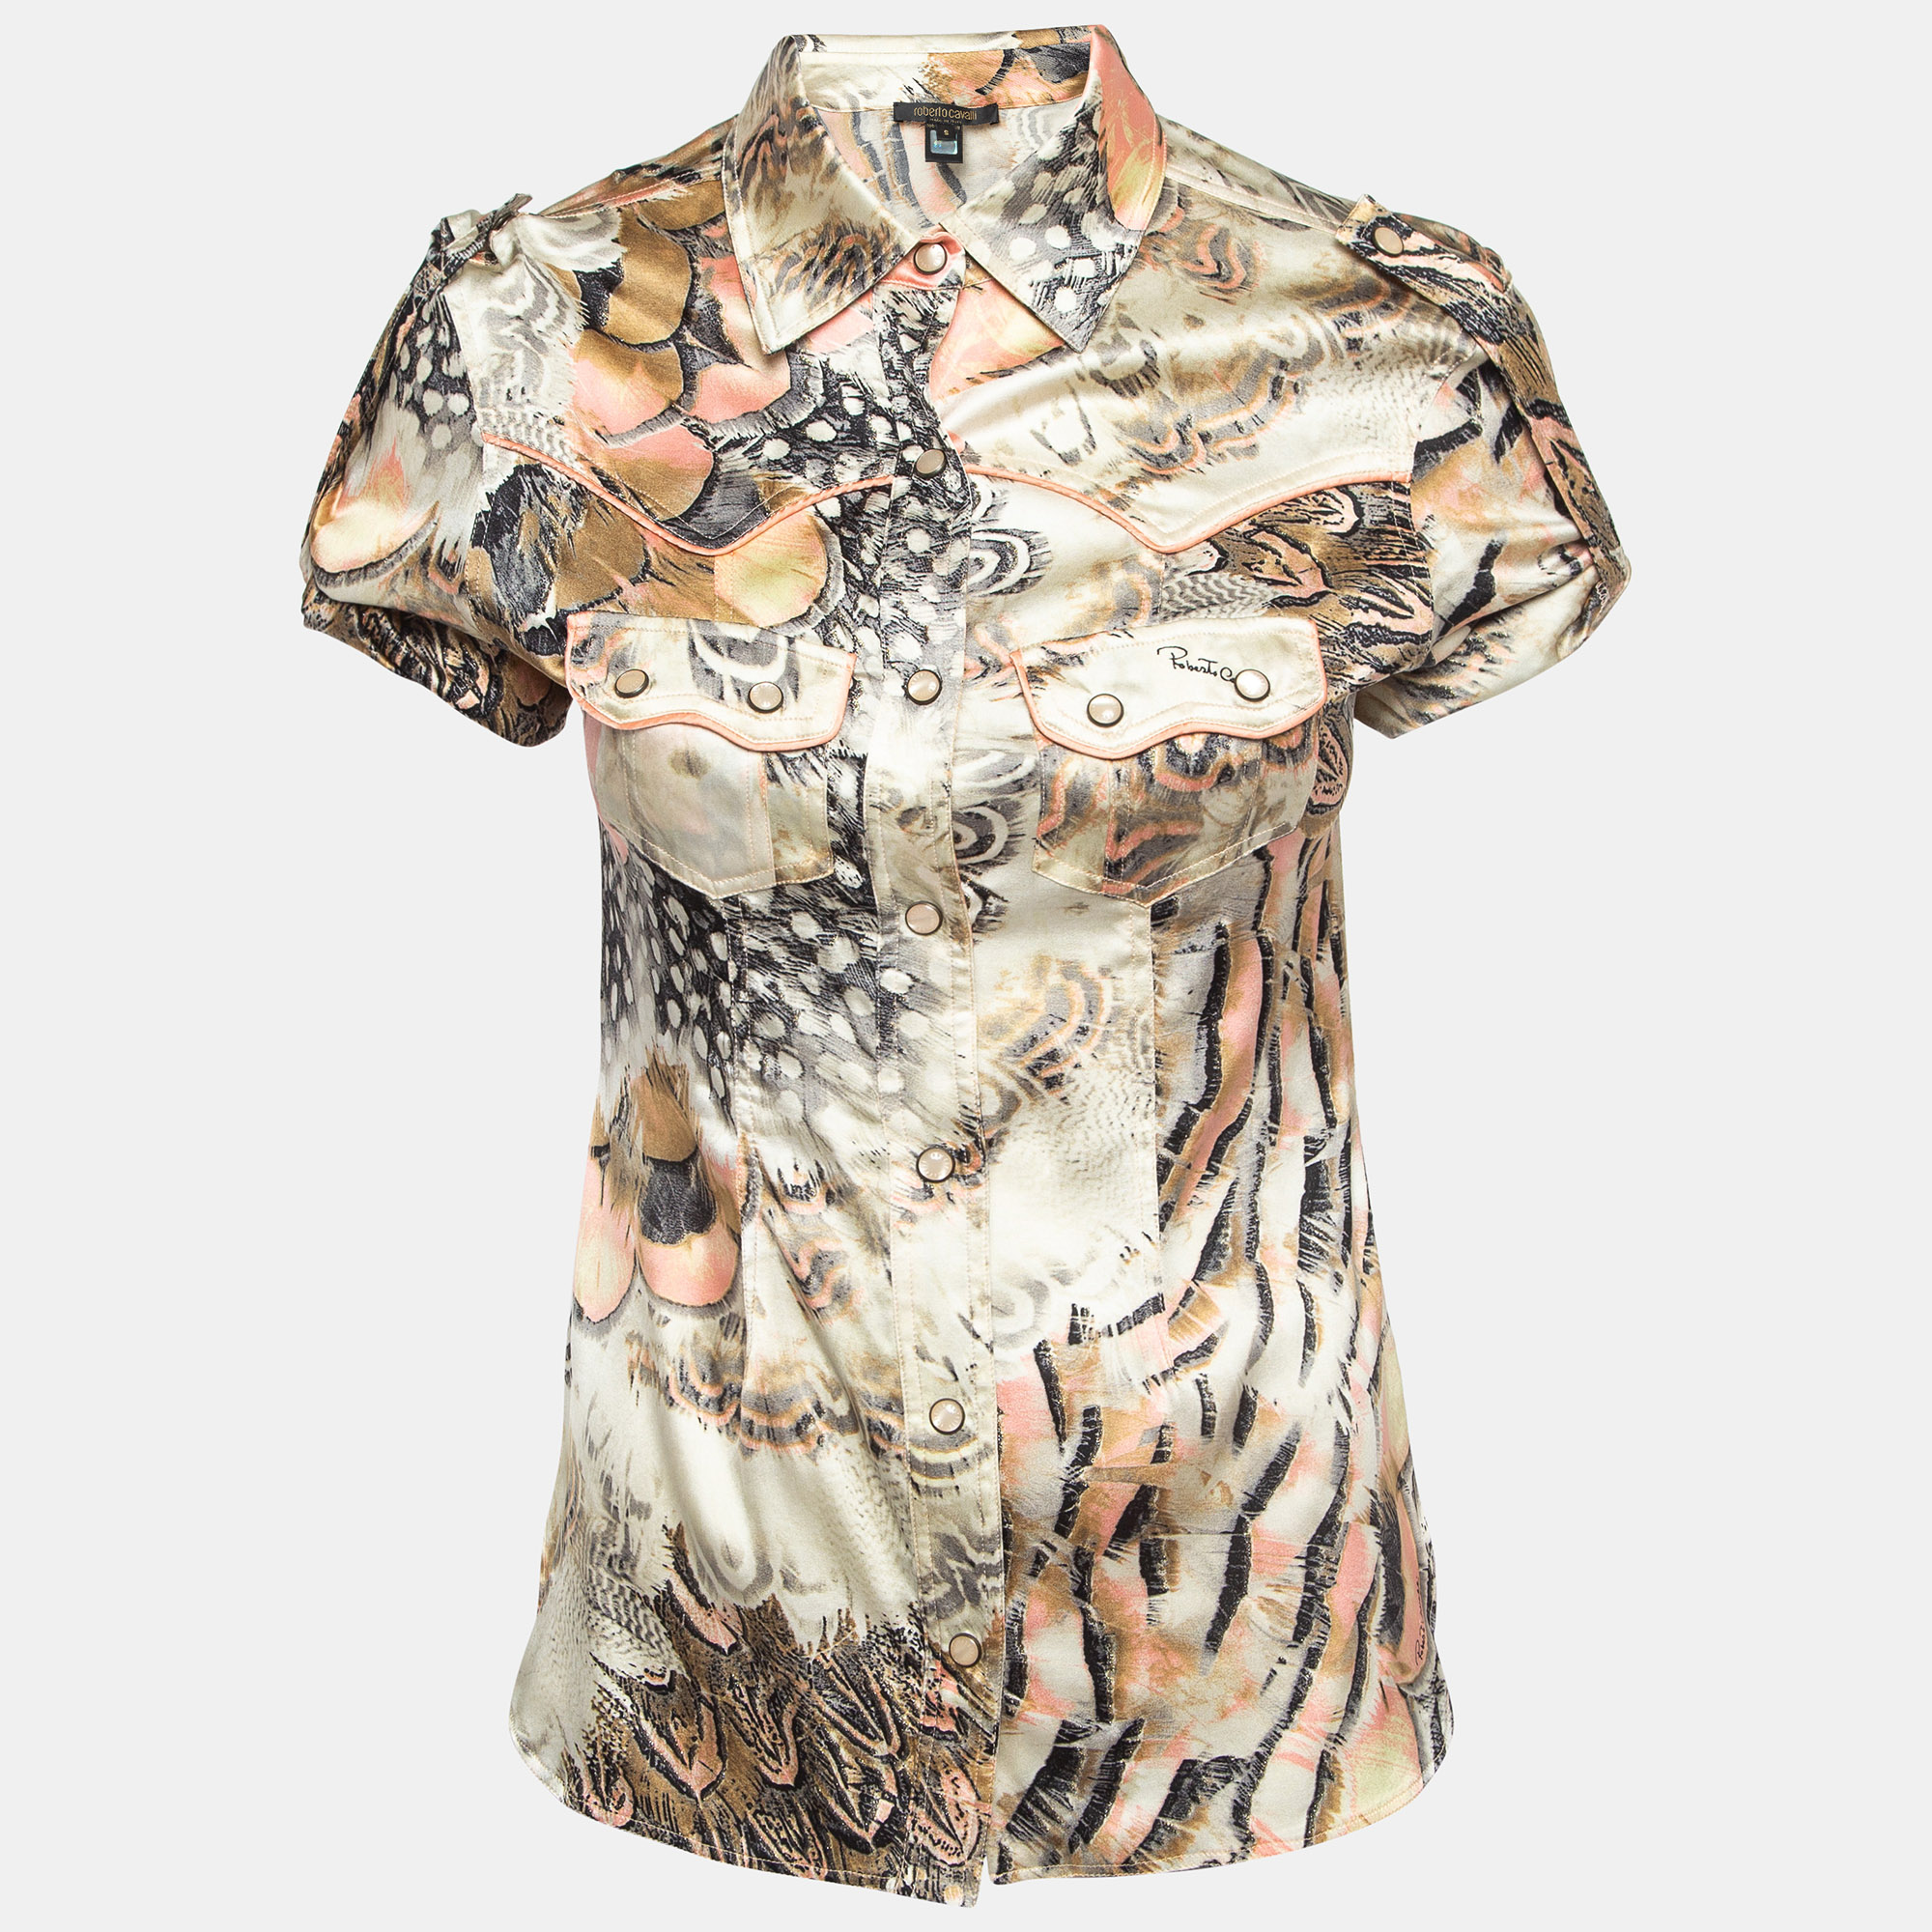 Roberto cavalli multicolor printed satin silk glitter detail shirt s